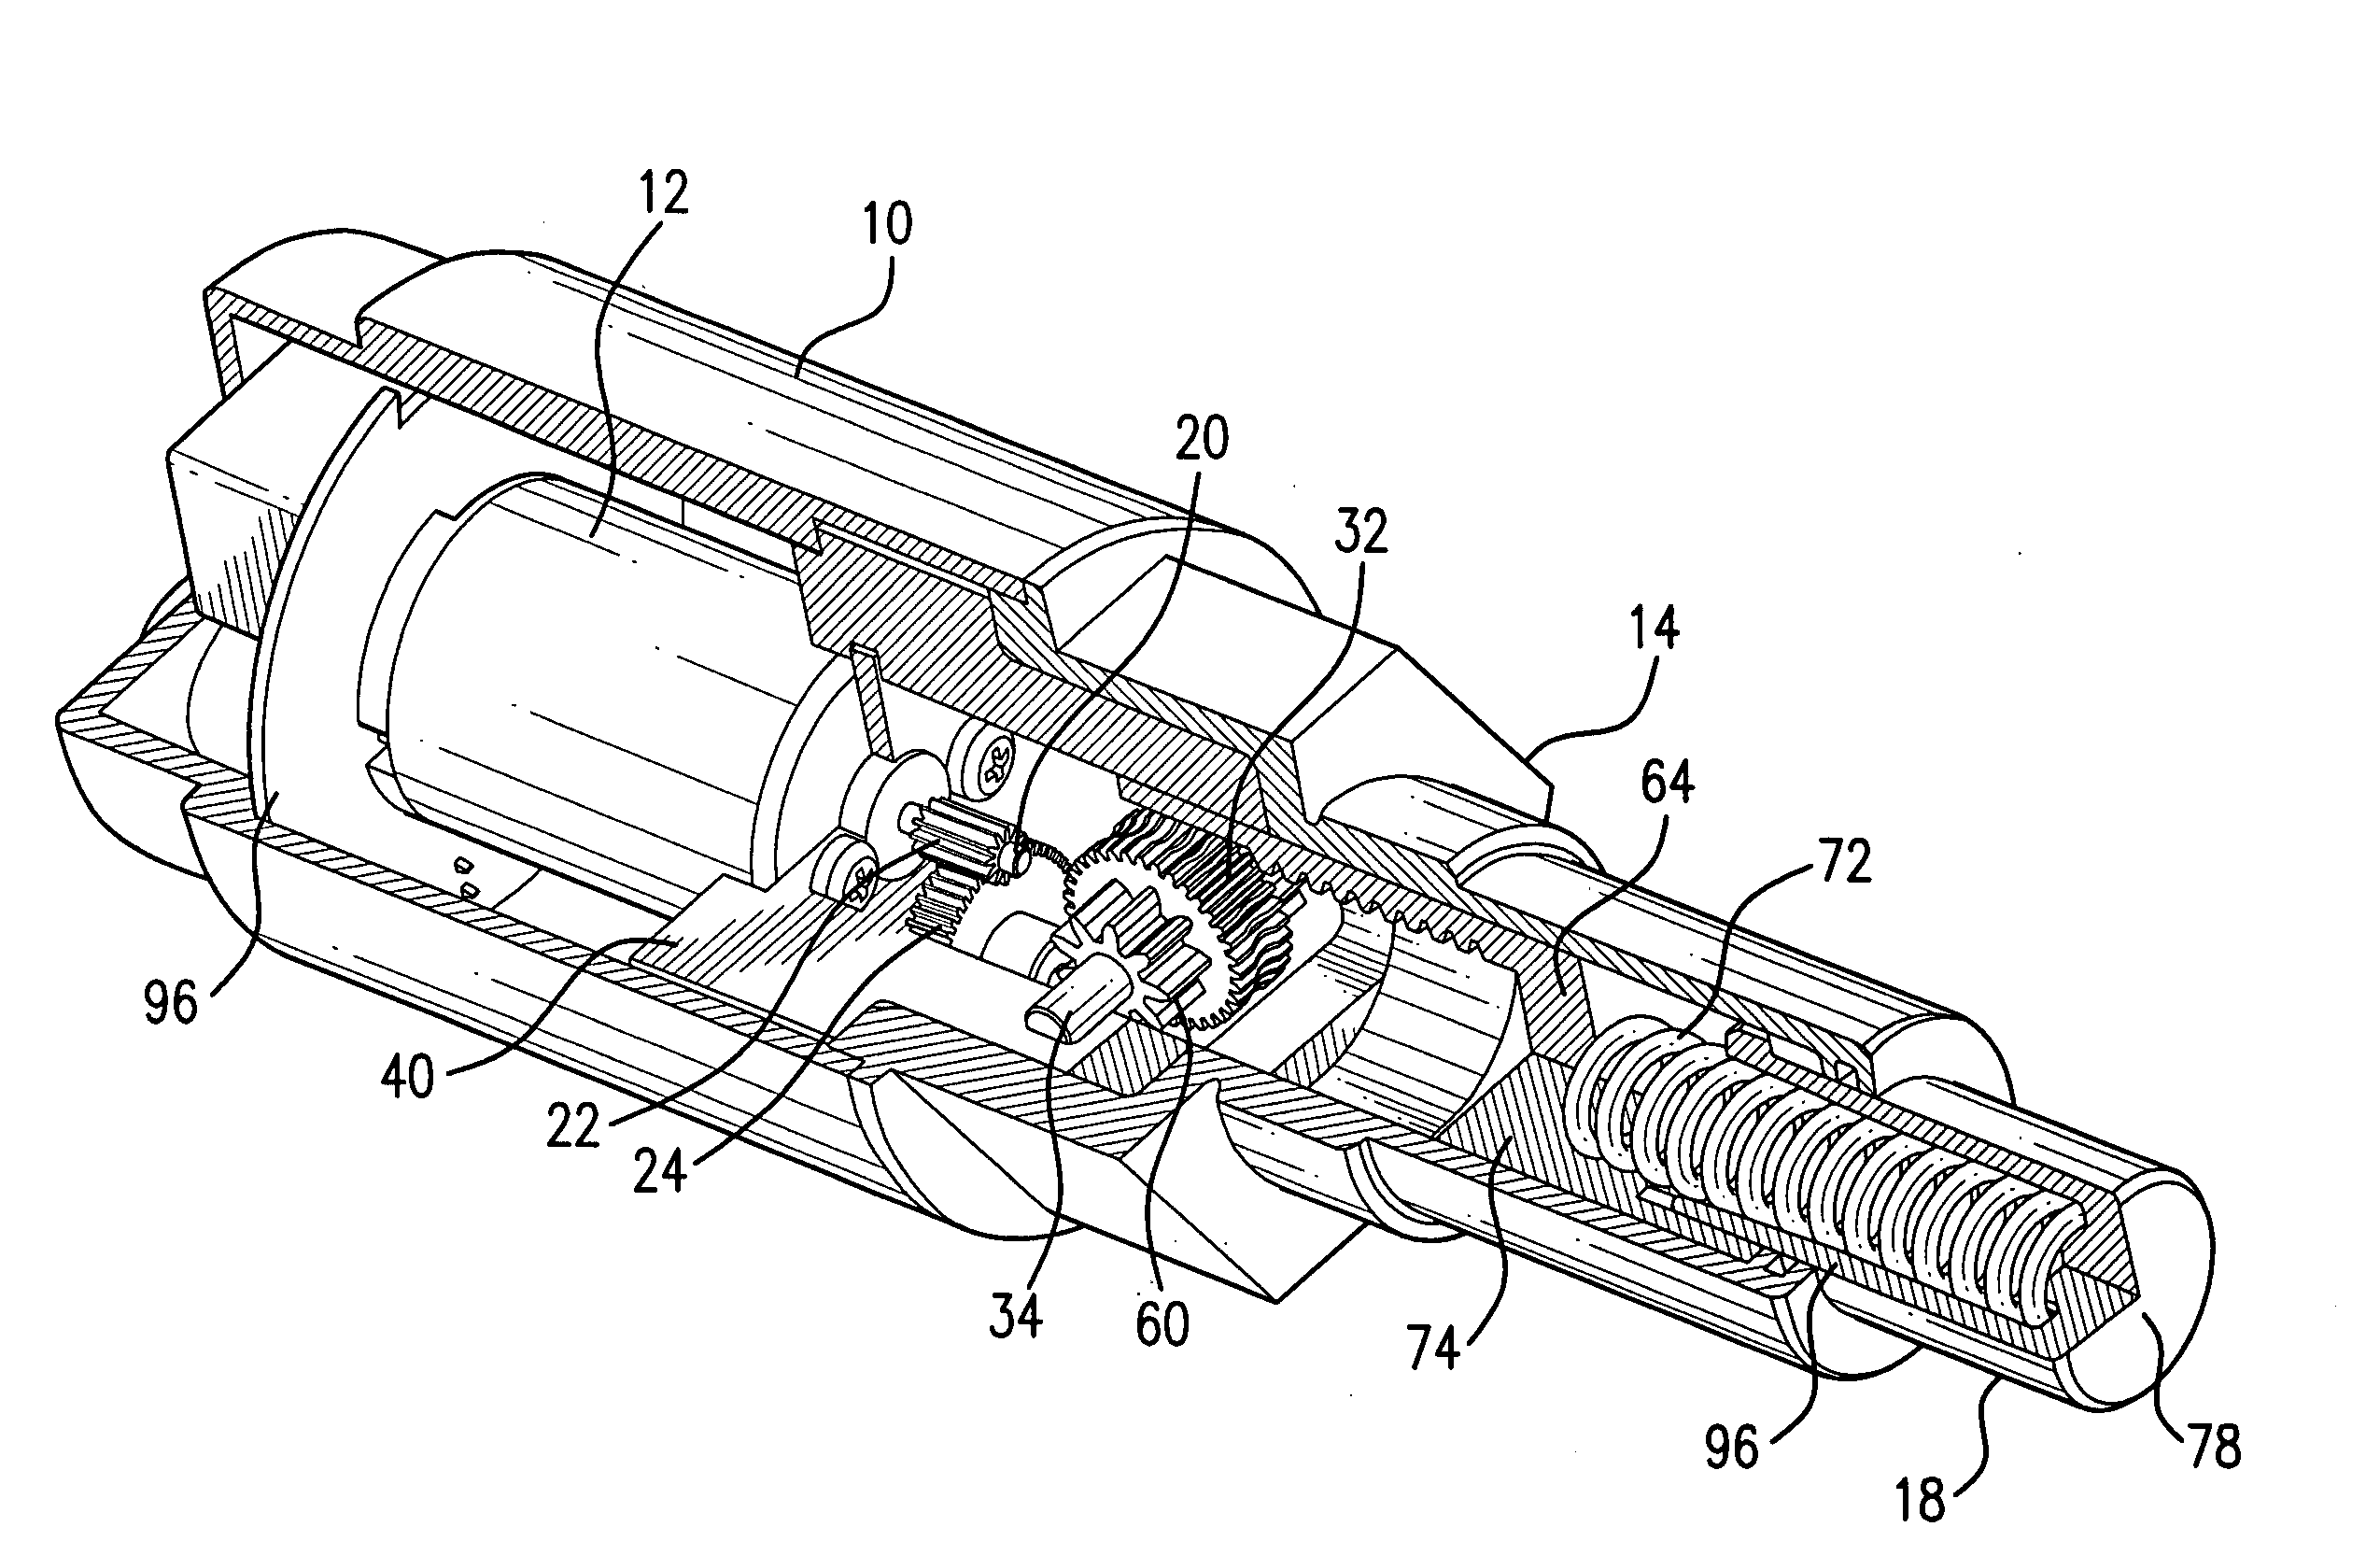 Motor-driven actuator